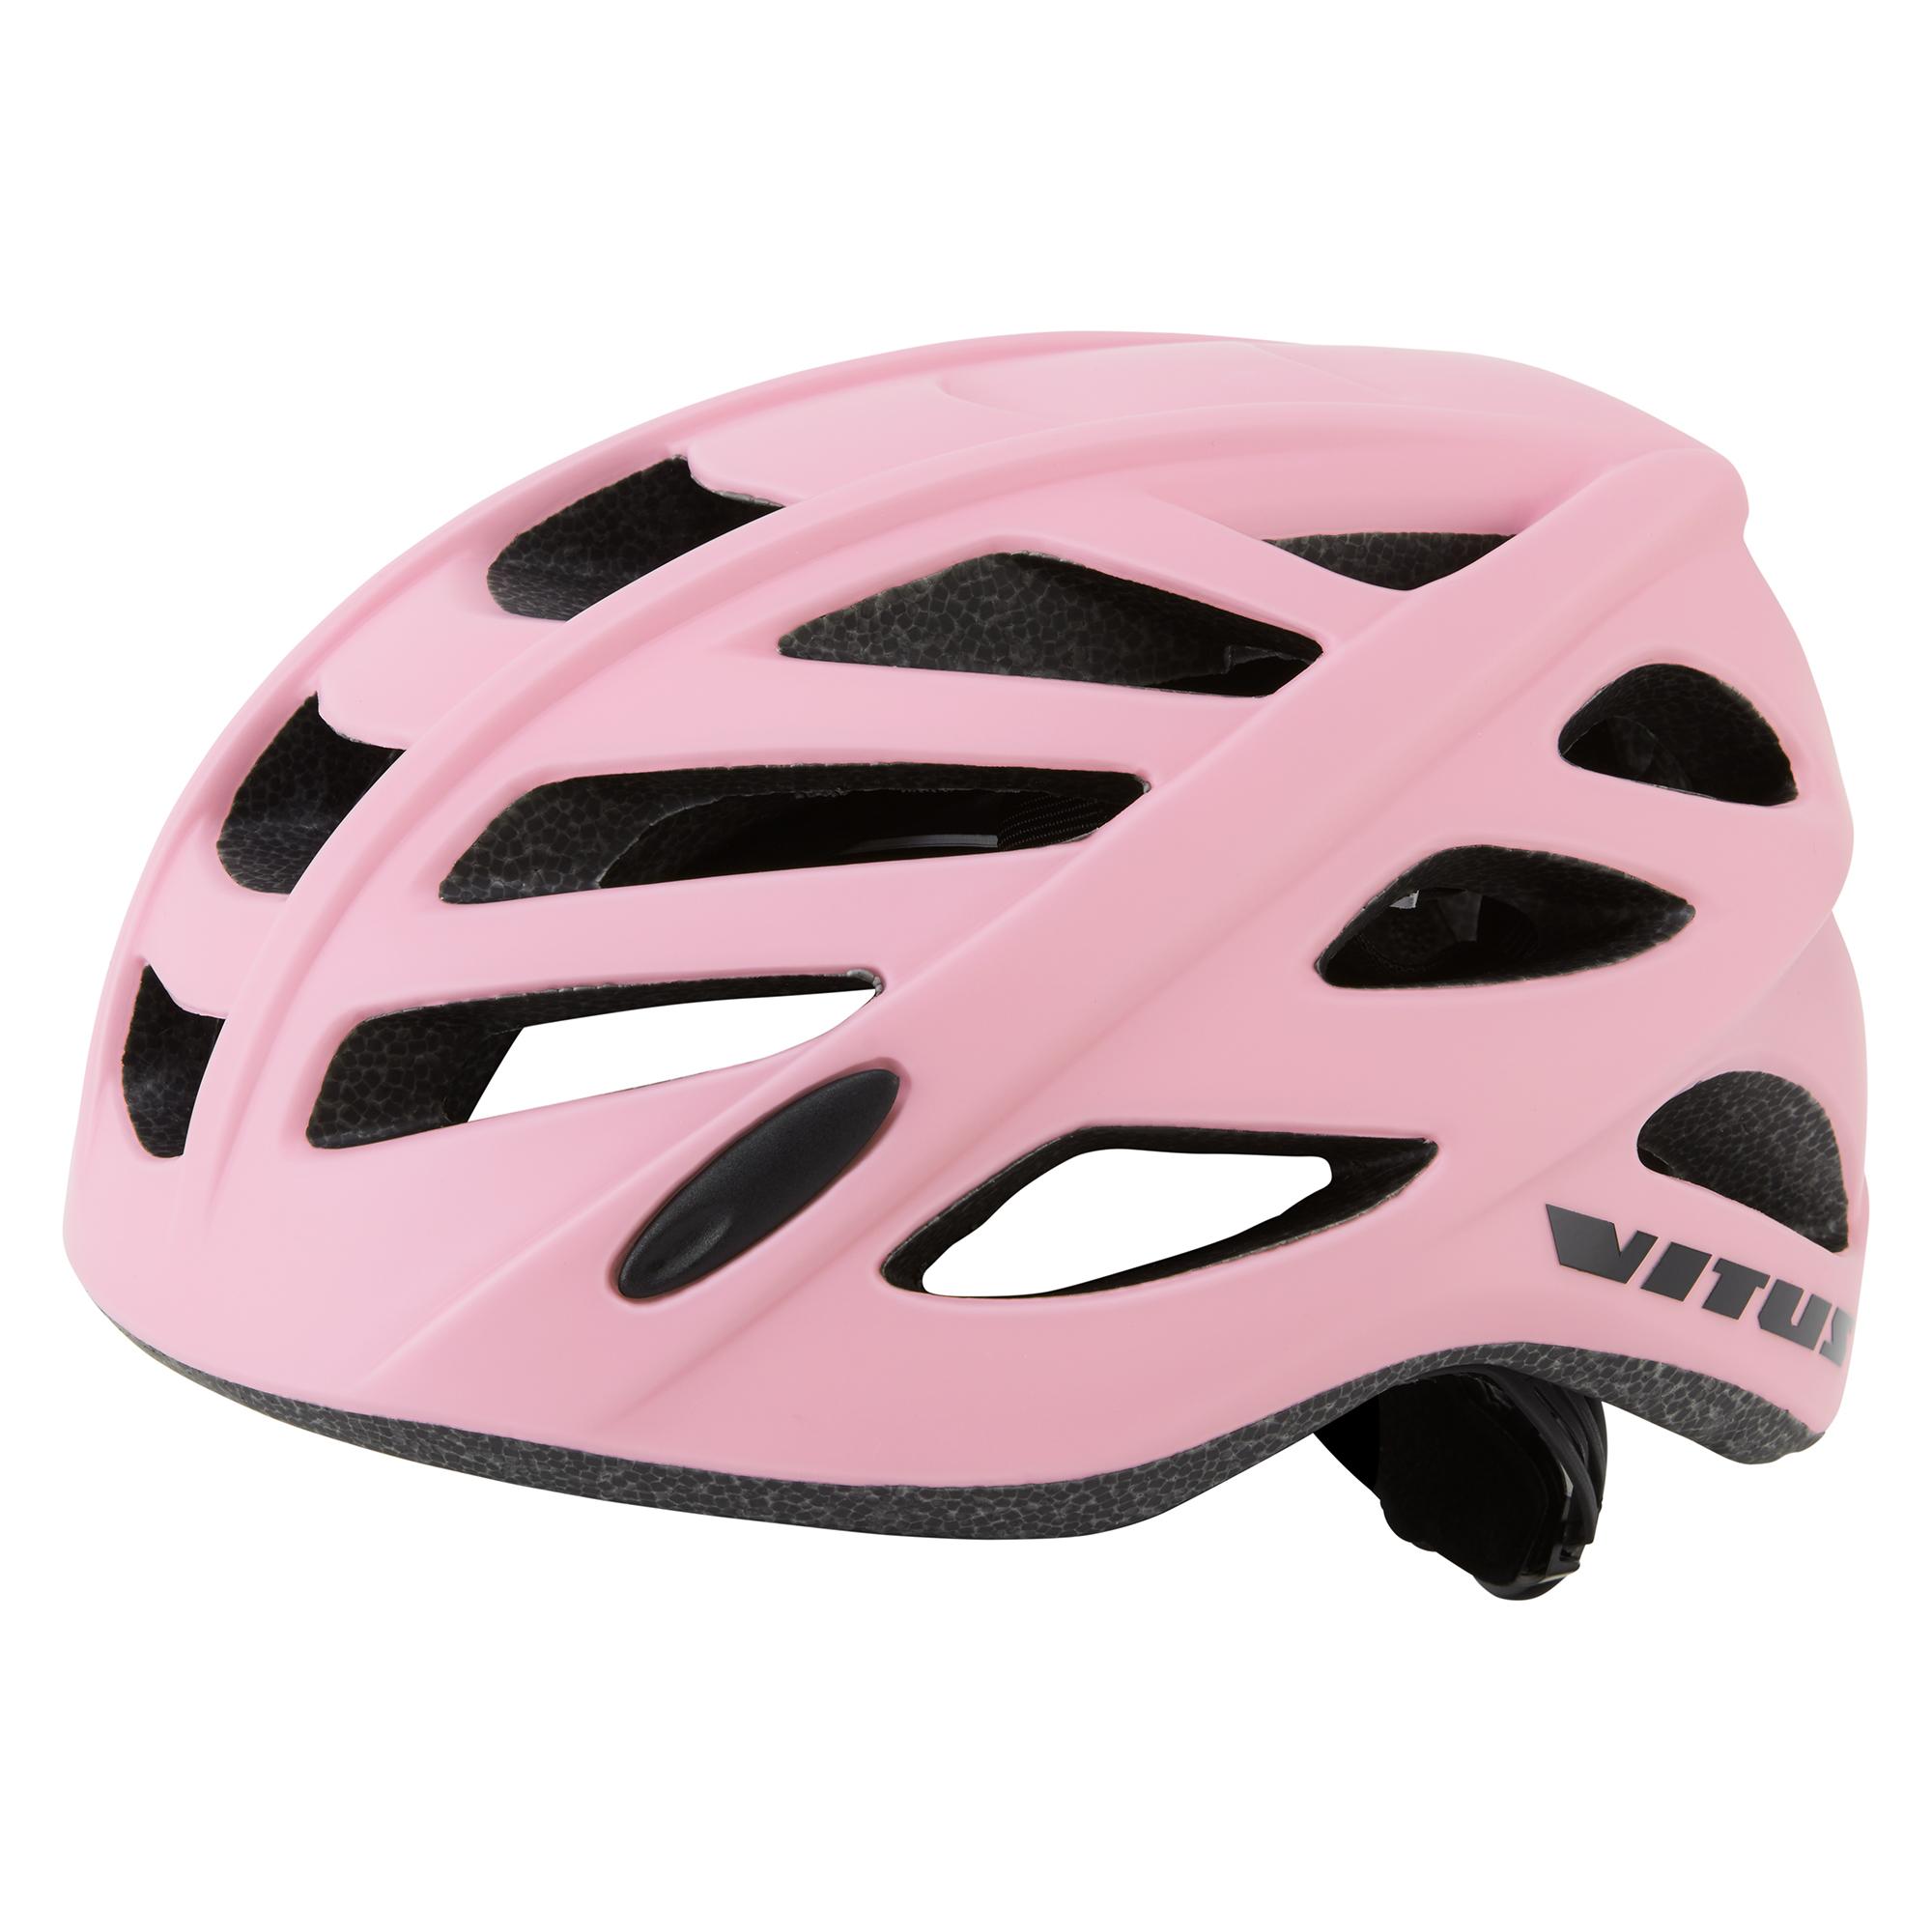 Vitus Noodle Helmet - Pink